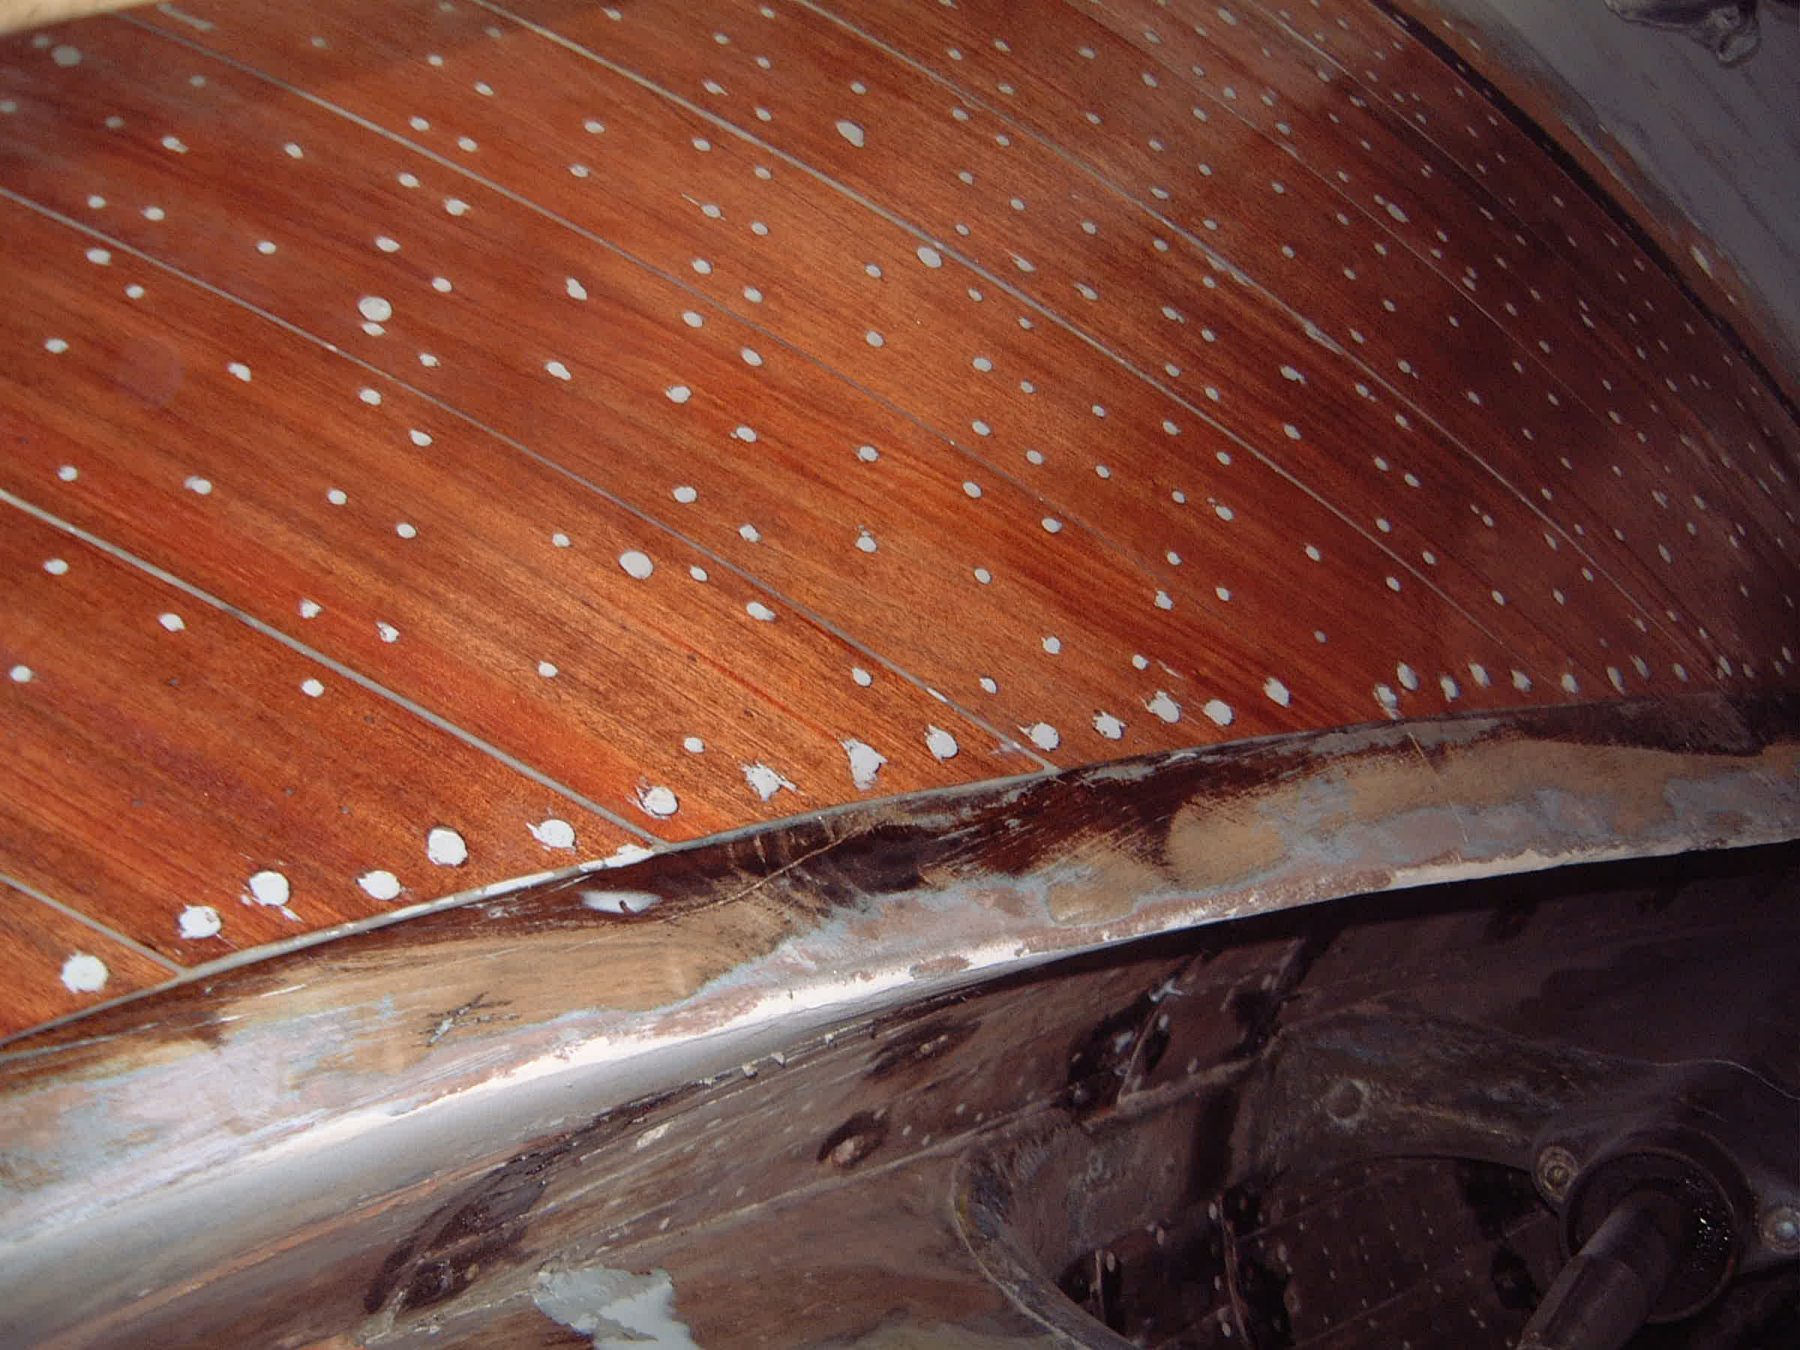 How to repair double diagonal hull planks